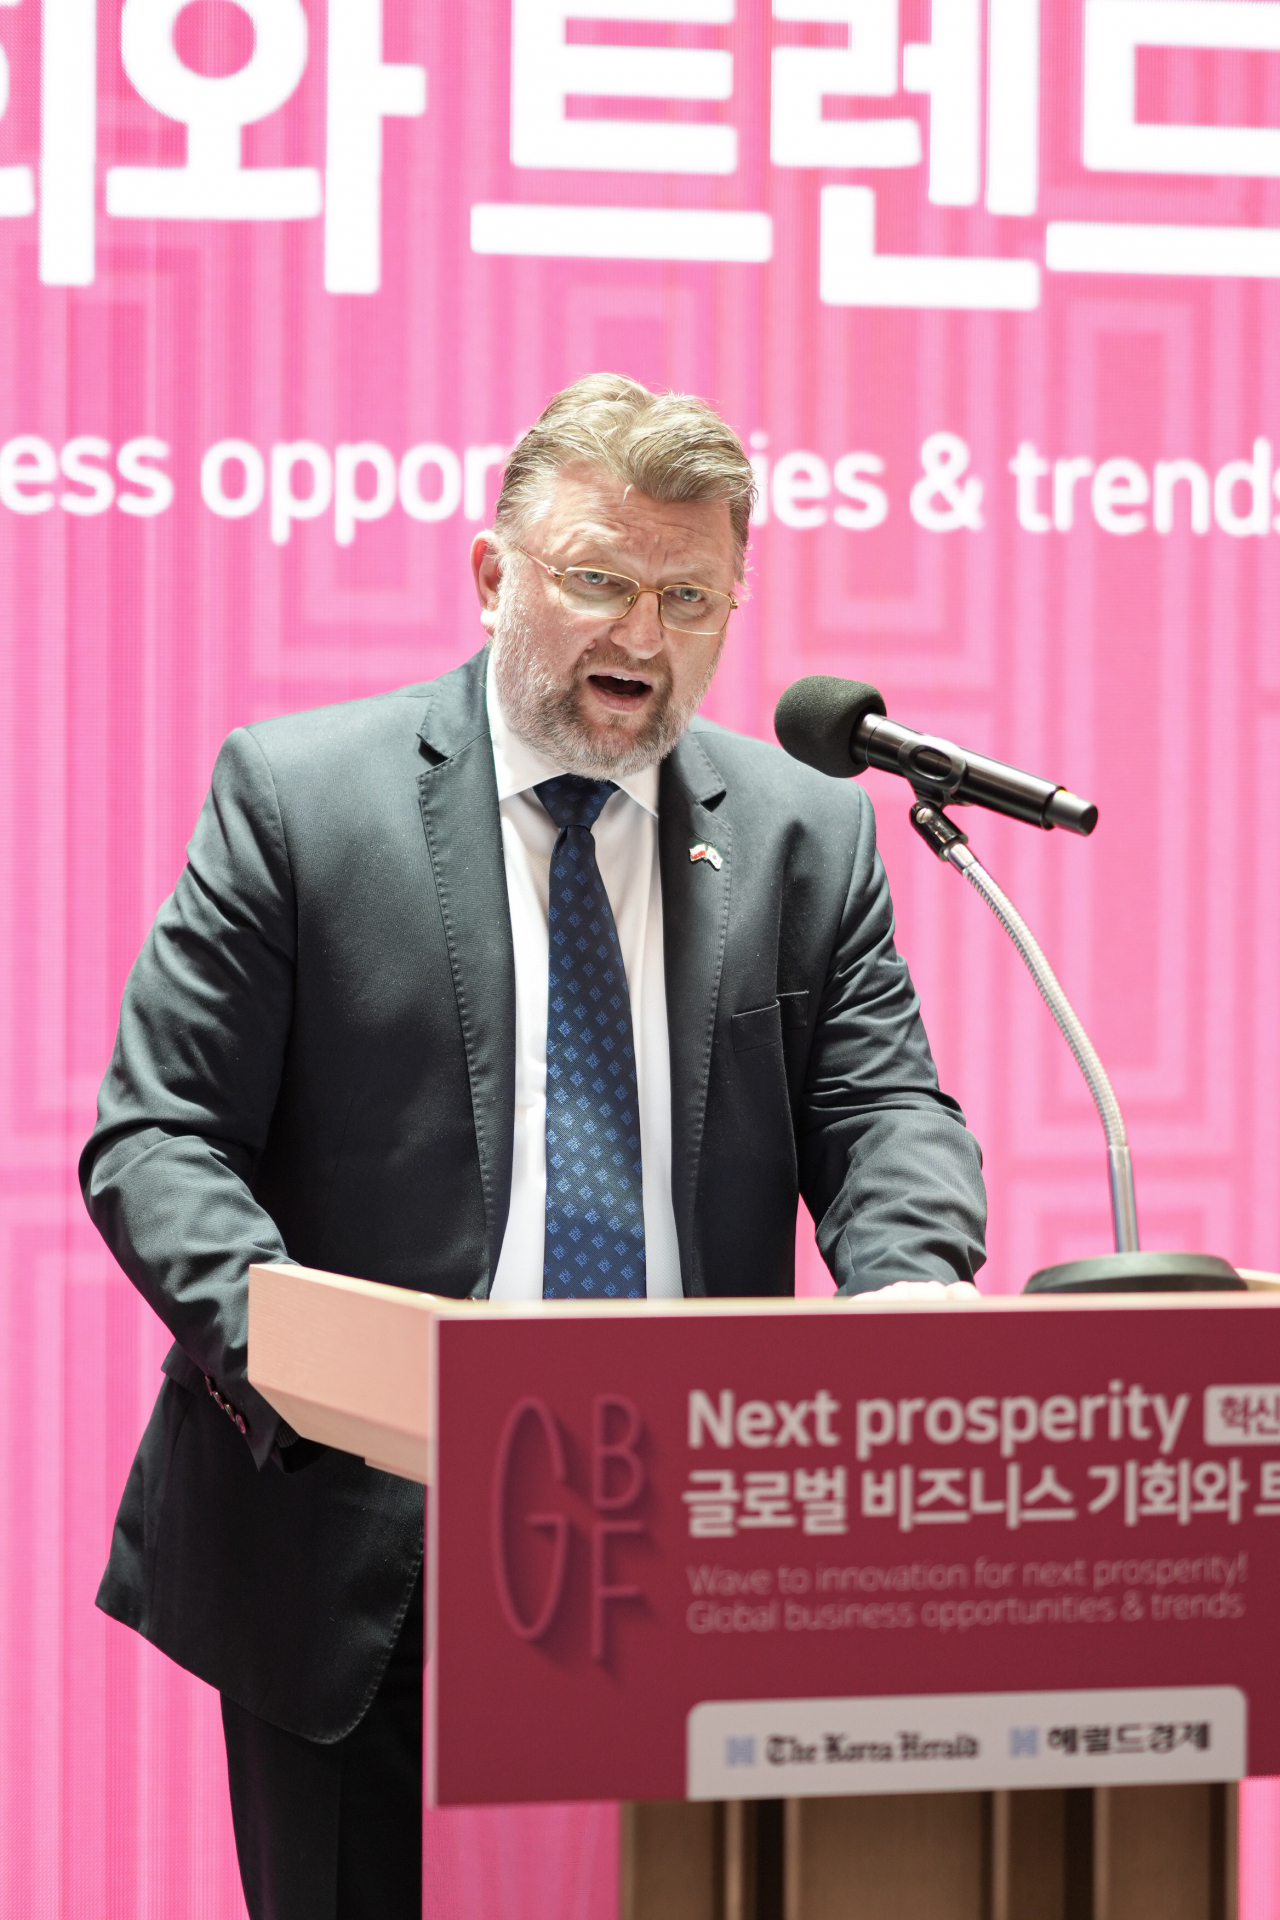 Polish Ambassador to Korea Piotr Ostaszewski delivers remarks at the third edition of the Global Business Forum hosted by The Korea Herald at the Ambassador Seoul hotel in Jung-gu, Seoul, Wednesday. (Damdastudio)